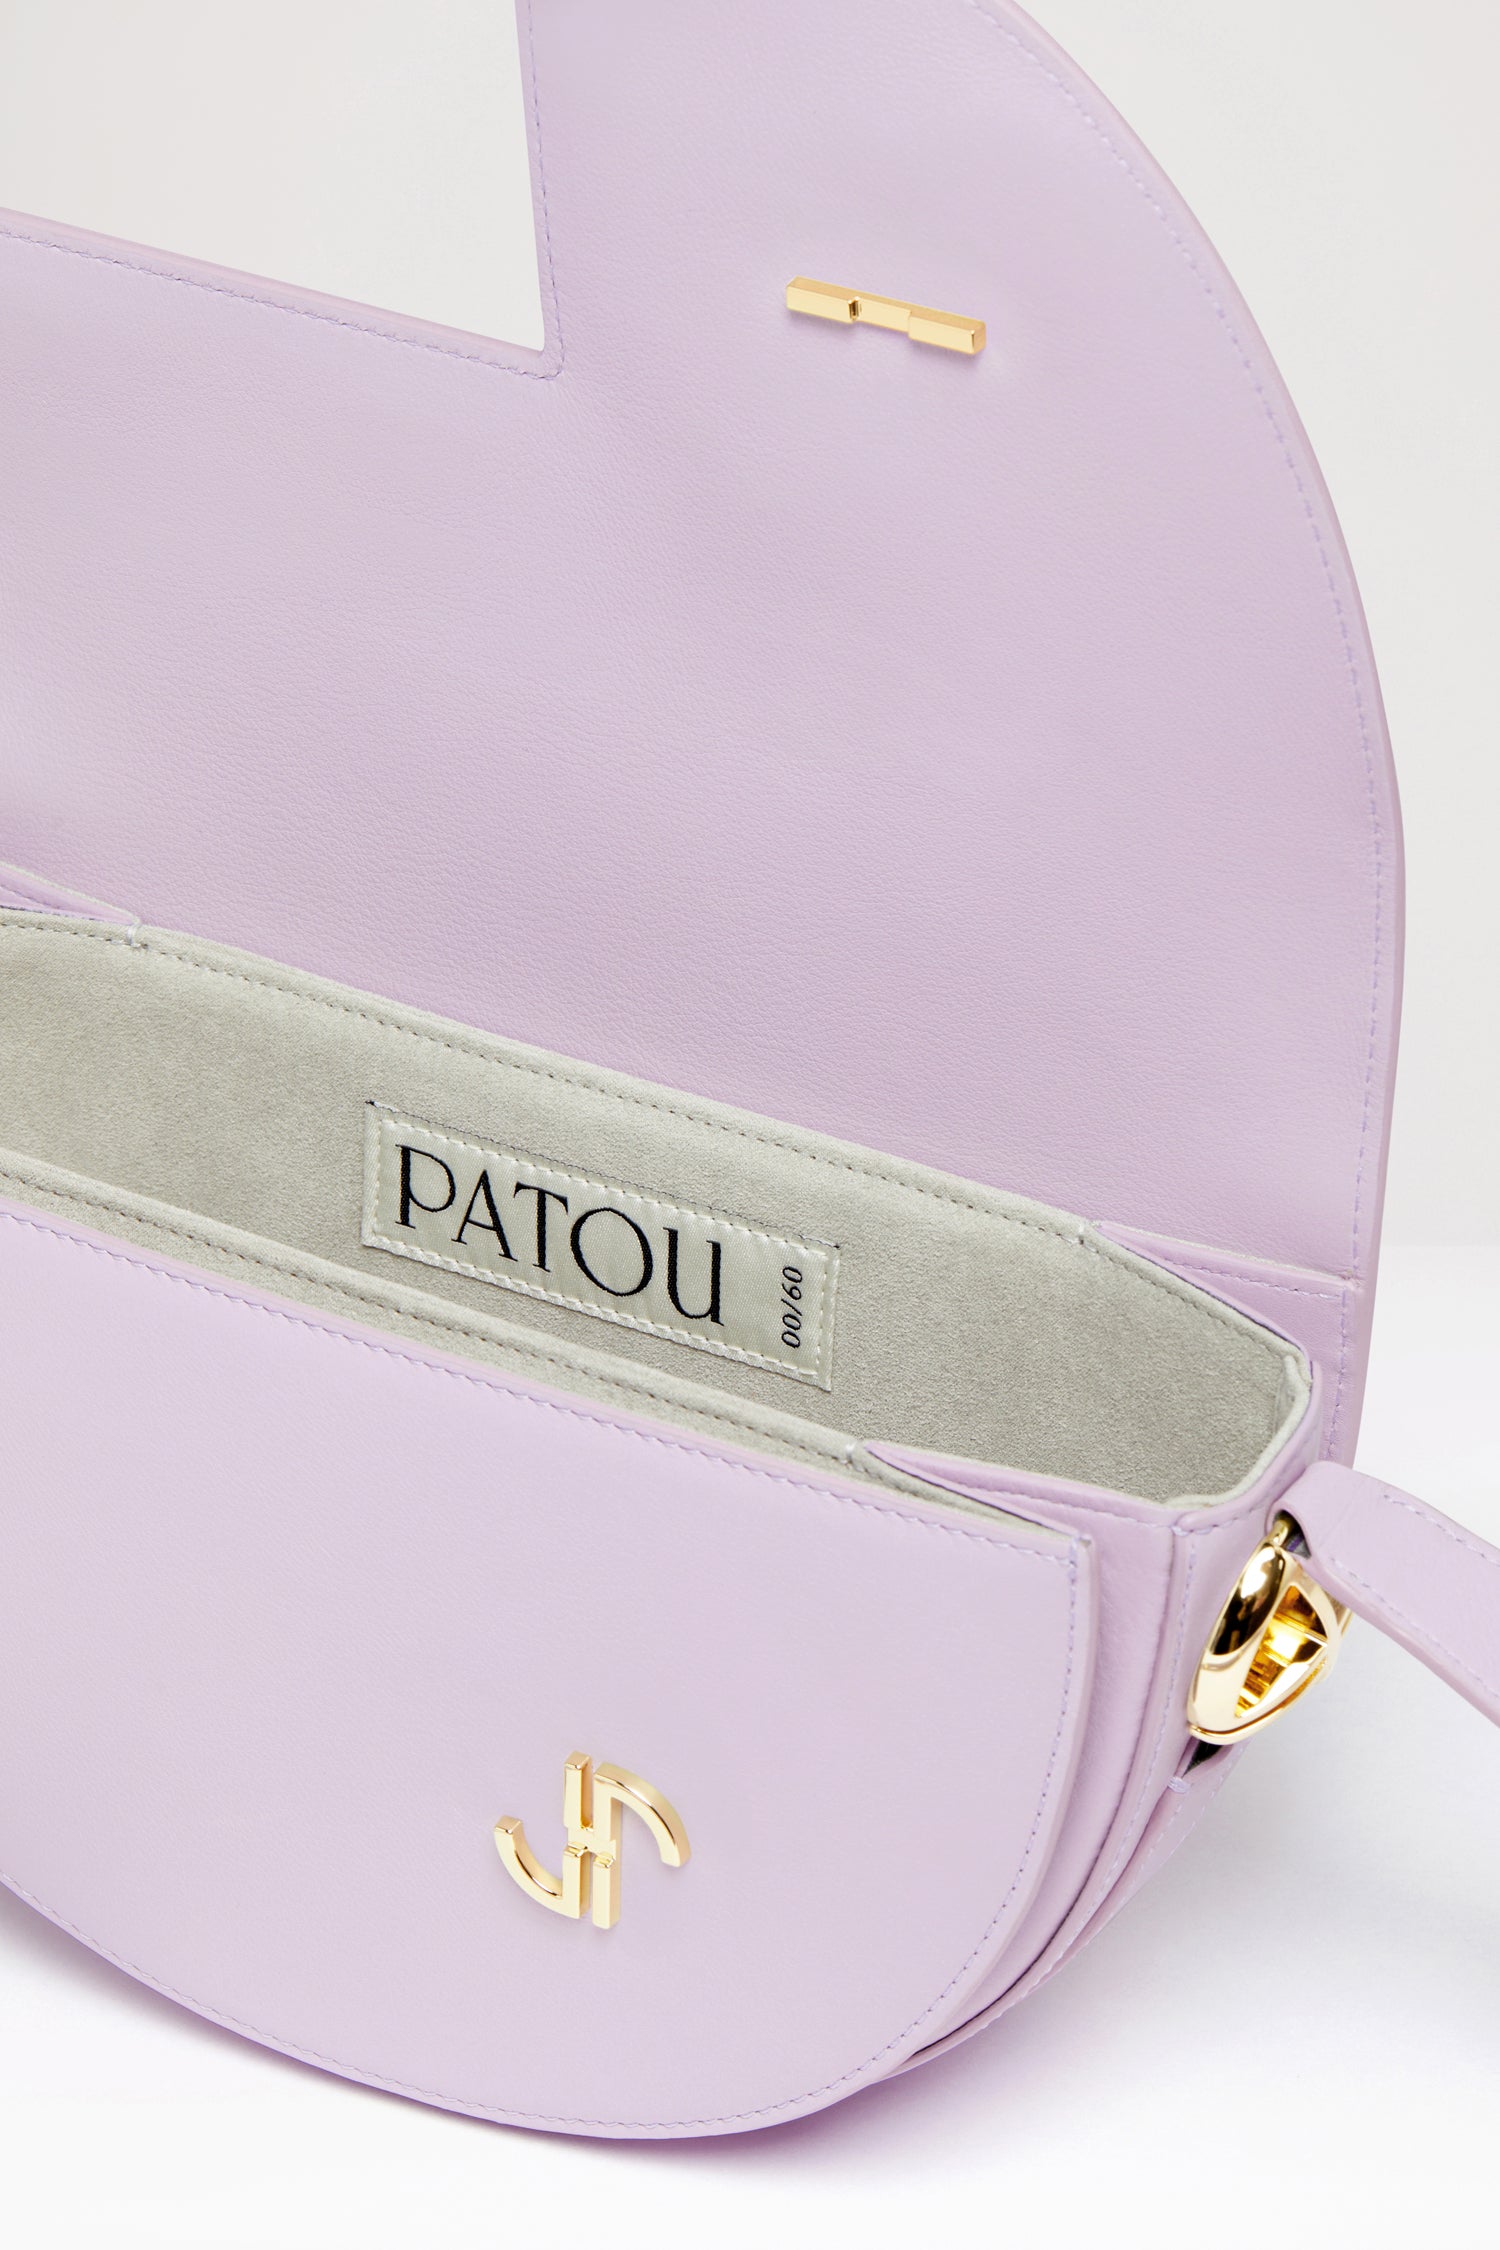 Patou | Le Patou bag